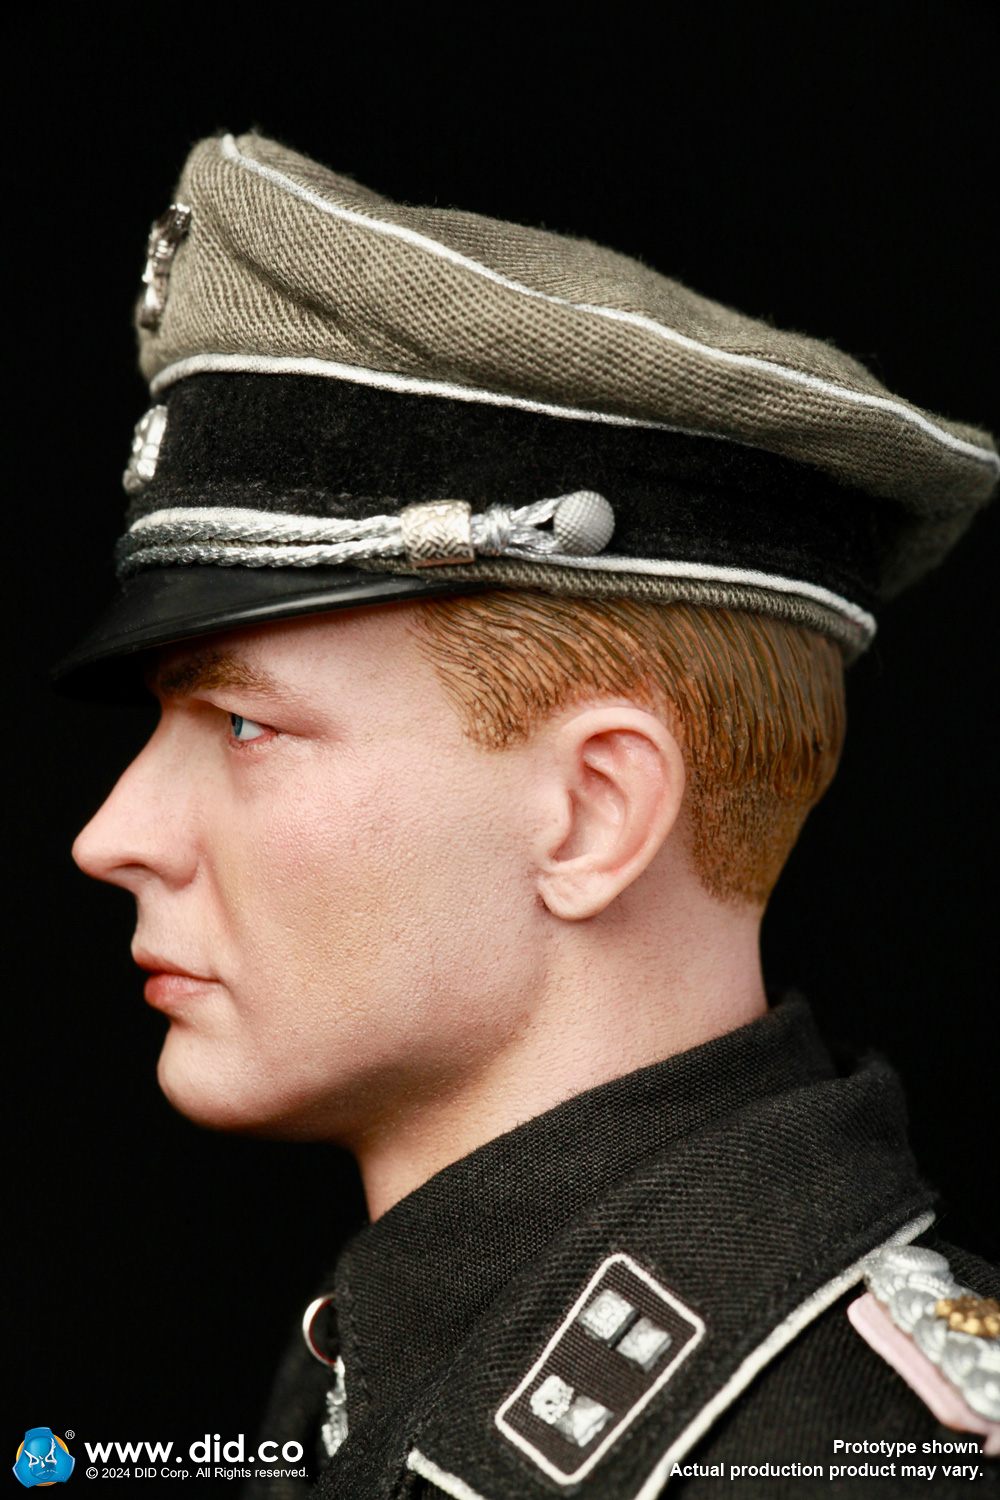 Max Wünsche - WWII German Panzer Commander